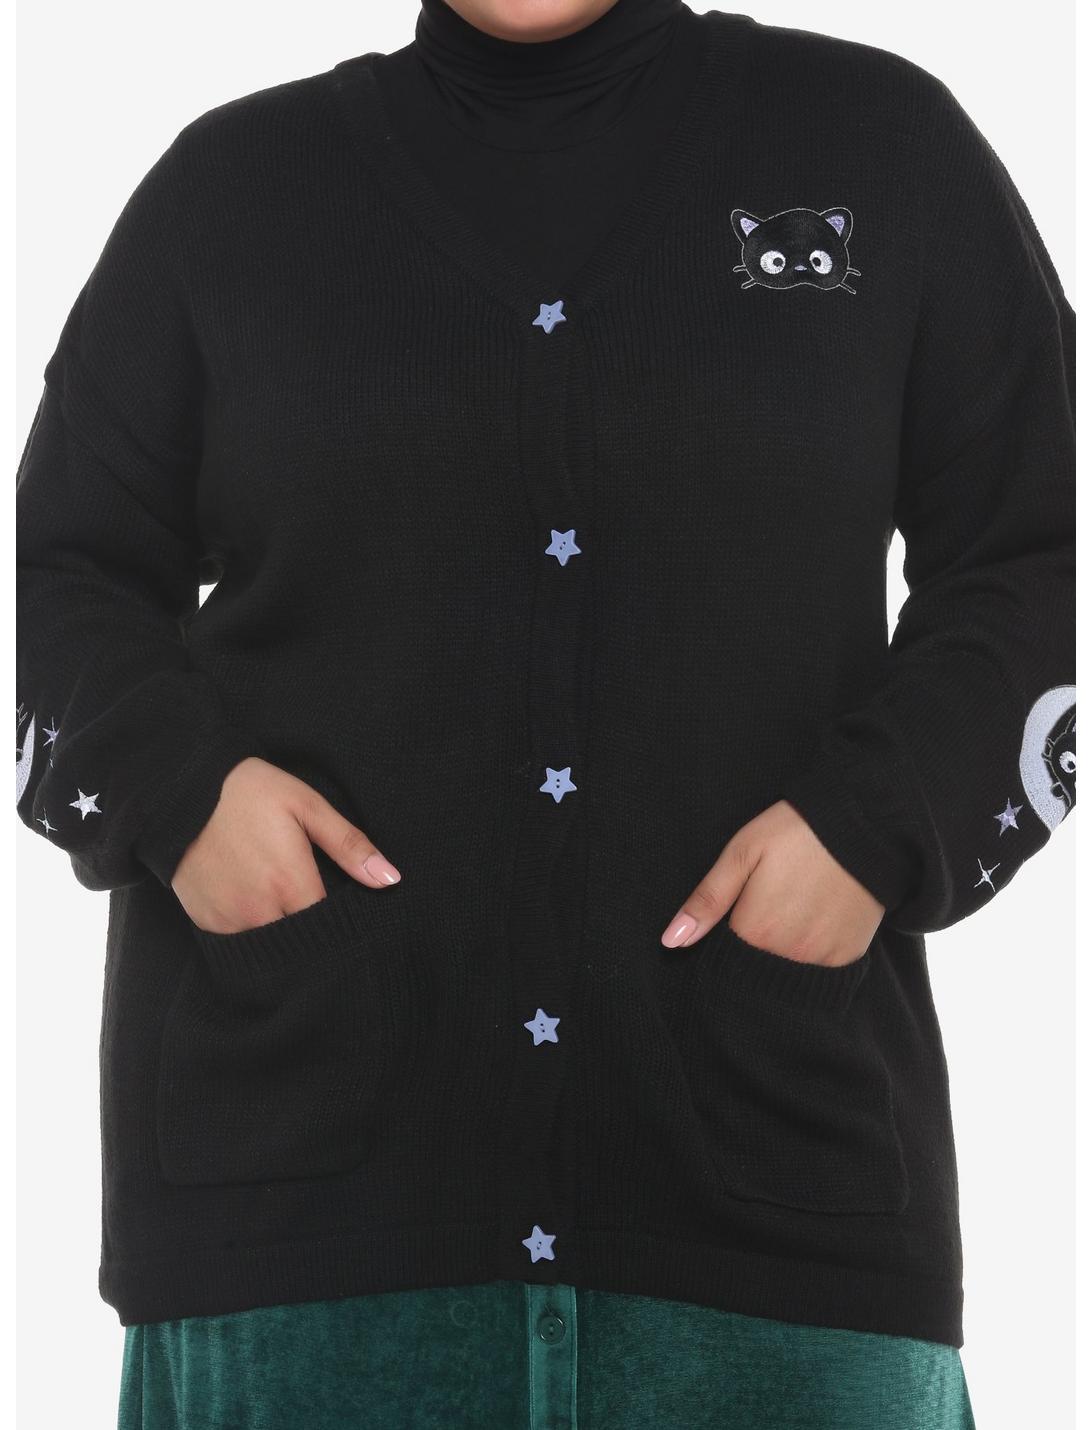 Chococat Embroidered Cardigan Plus Size, BLACK  WHITE, hi-res